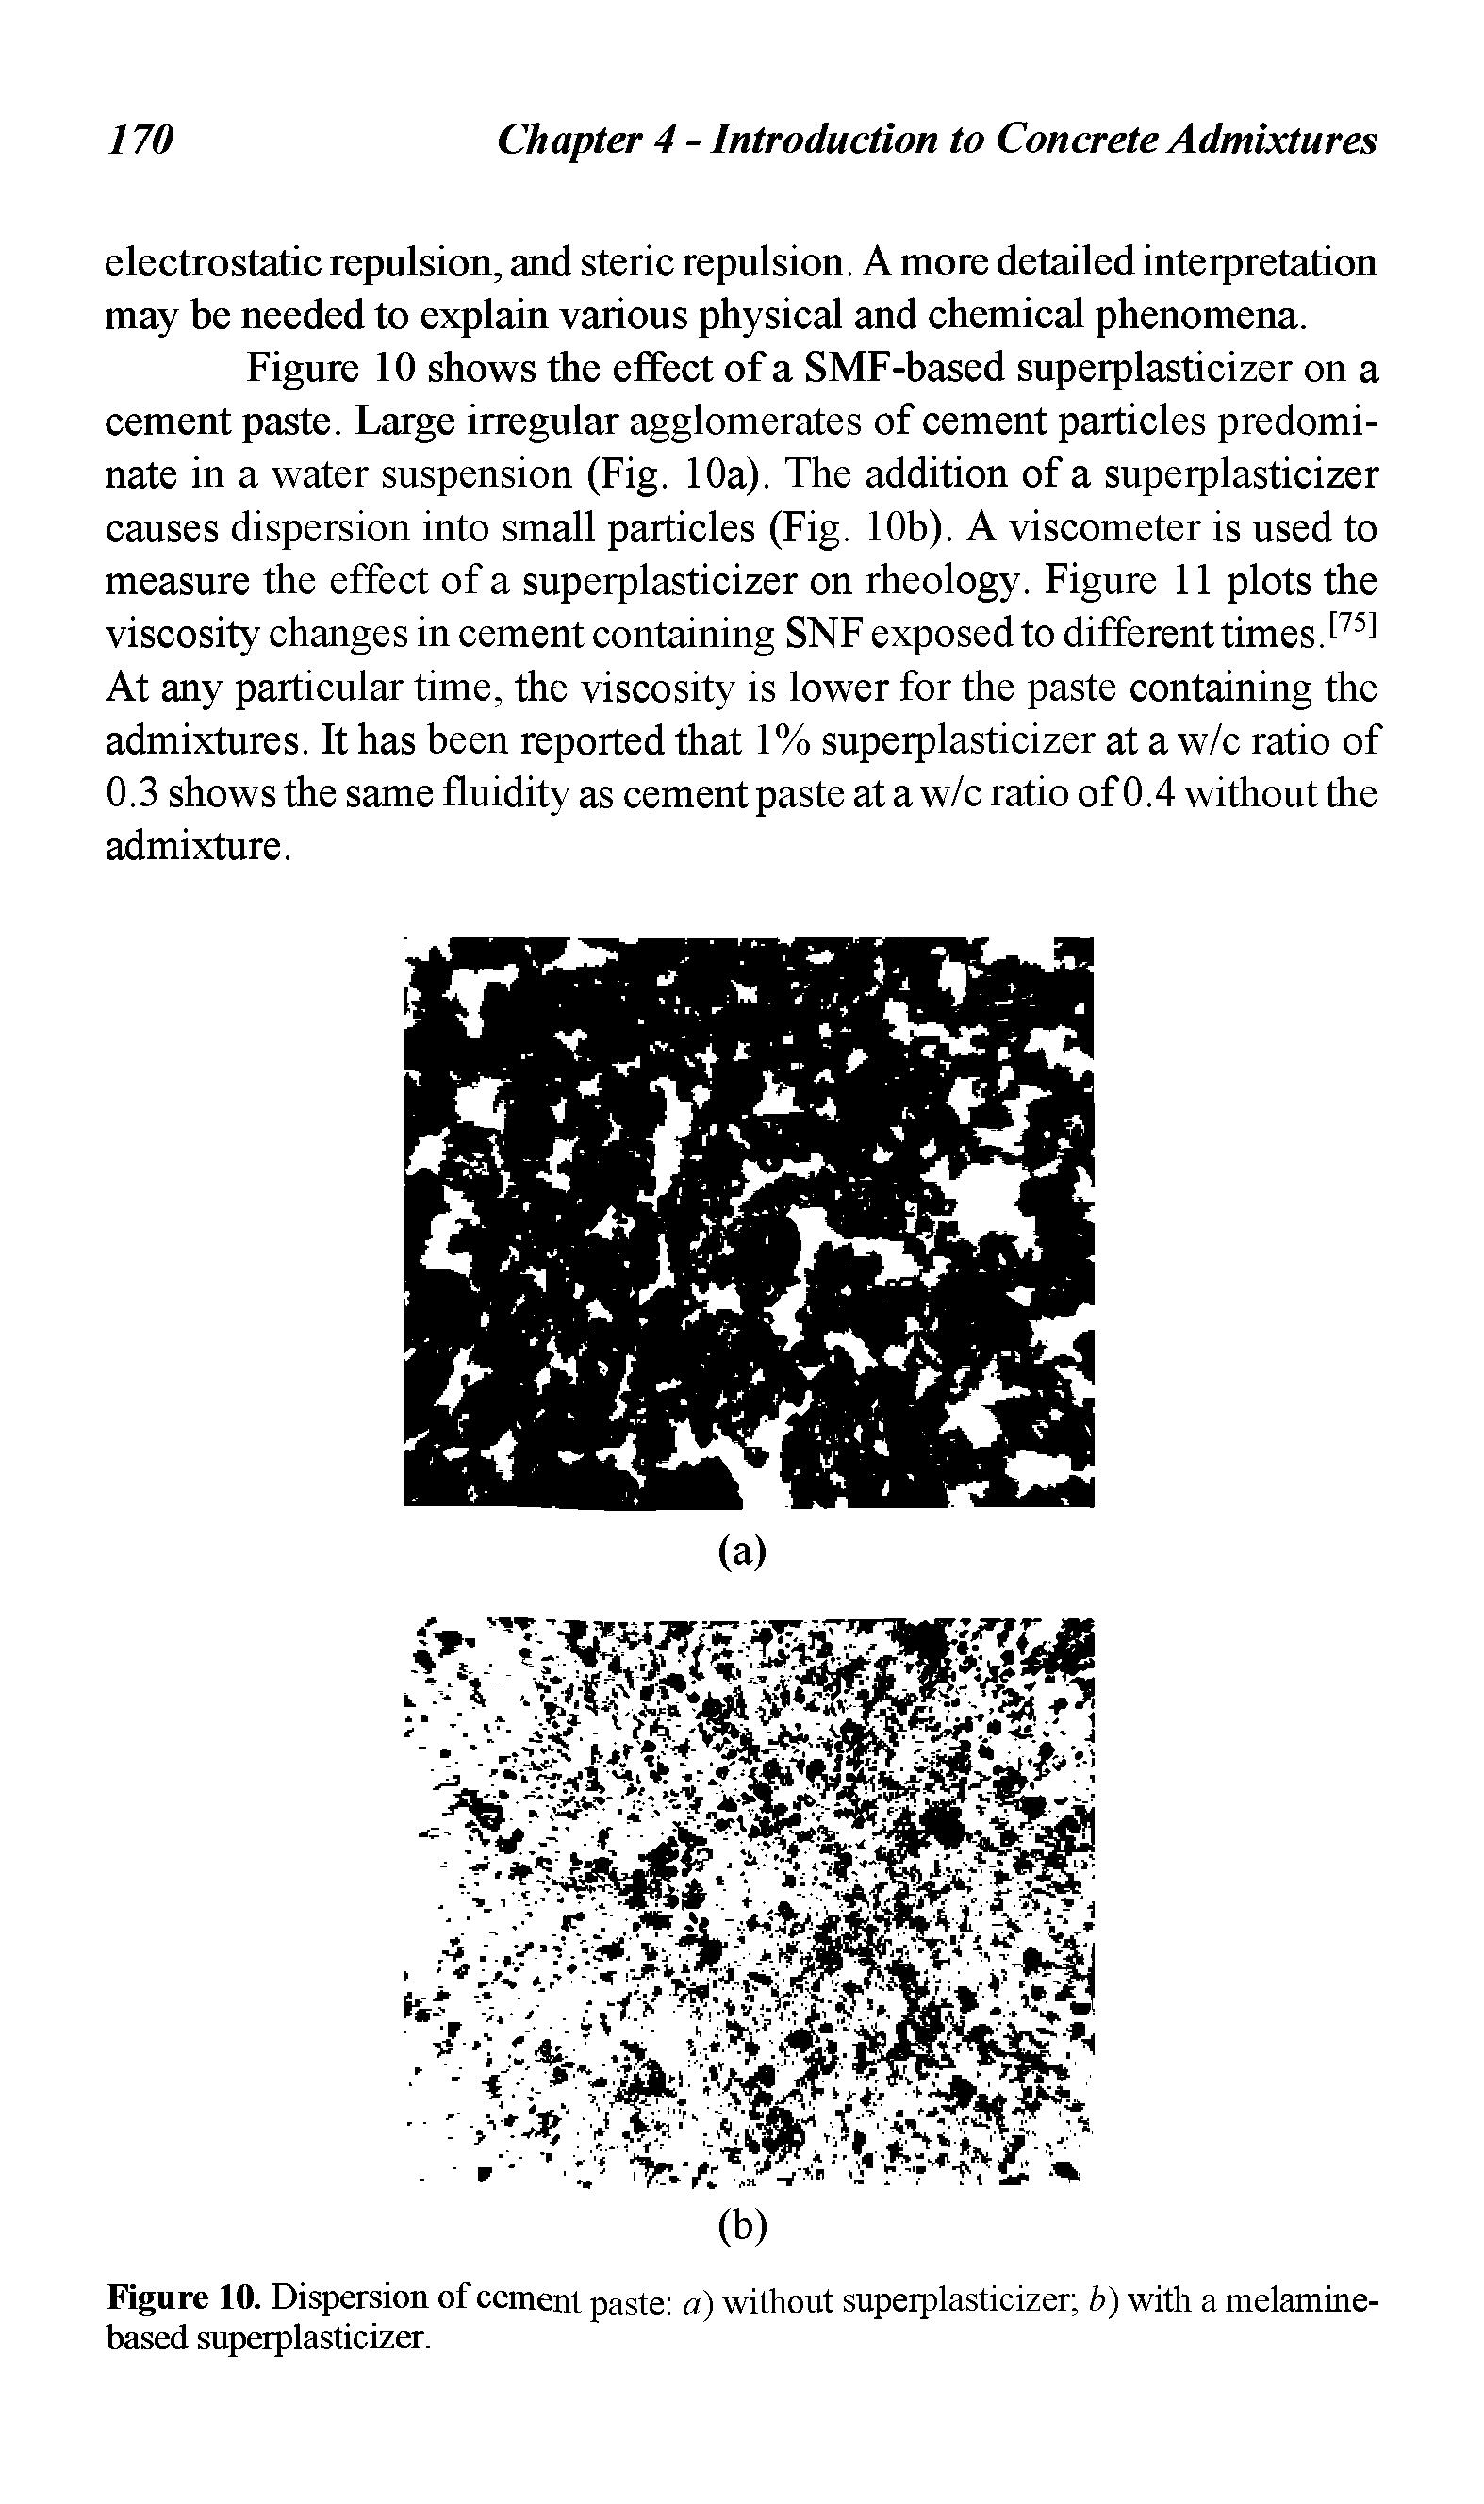 Figure 10. Dispersion of cement paste a) without supeiplasticizer b) with a melamine-based supeiplasticizer.